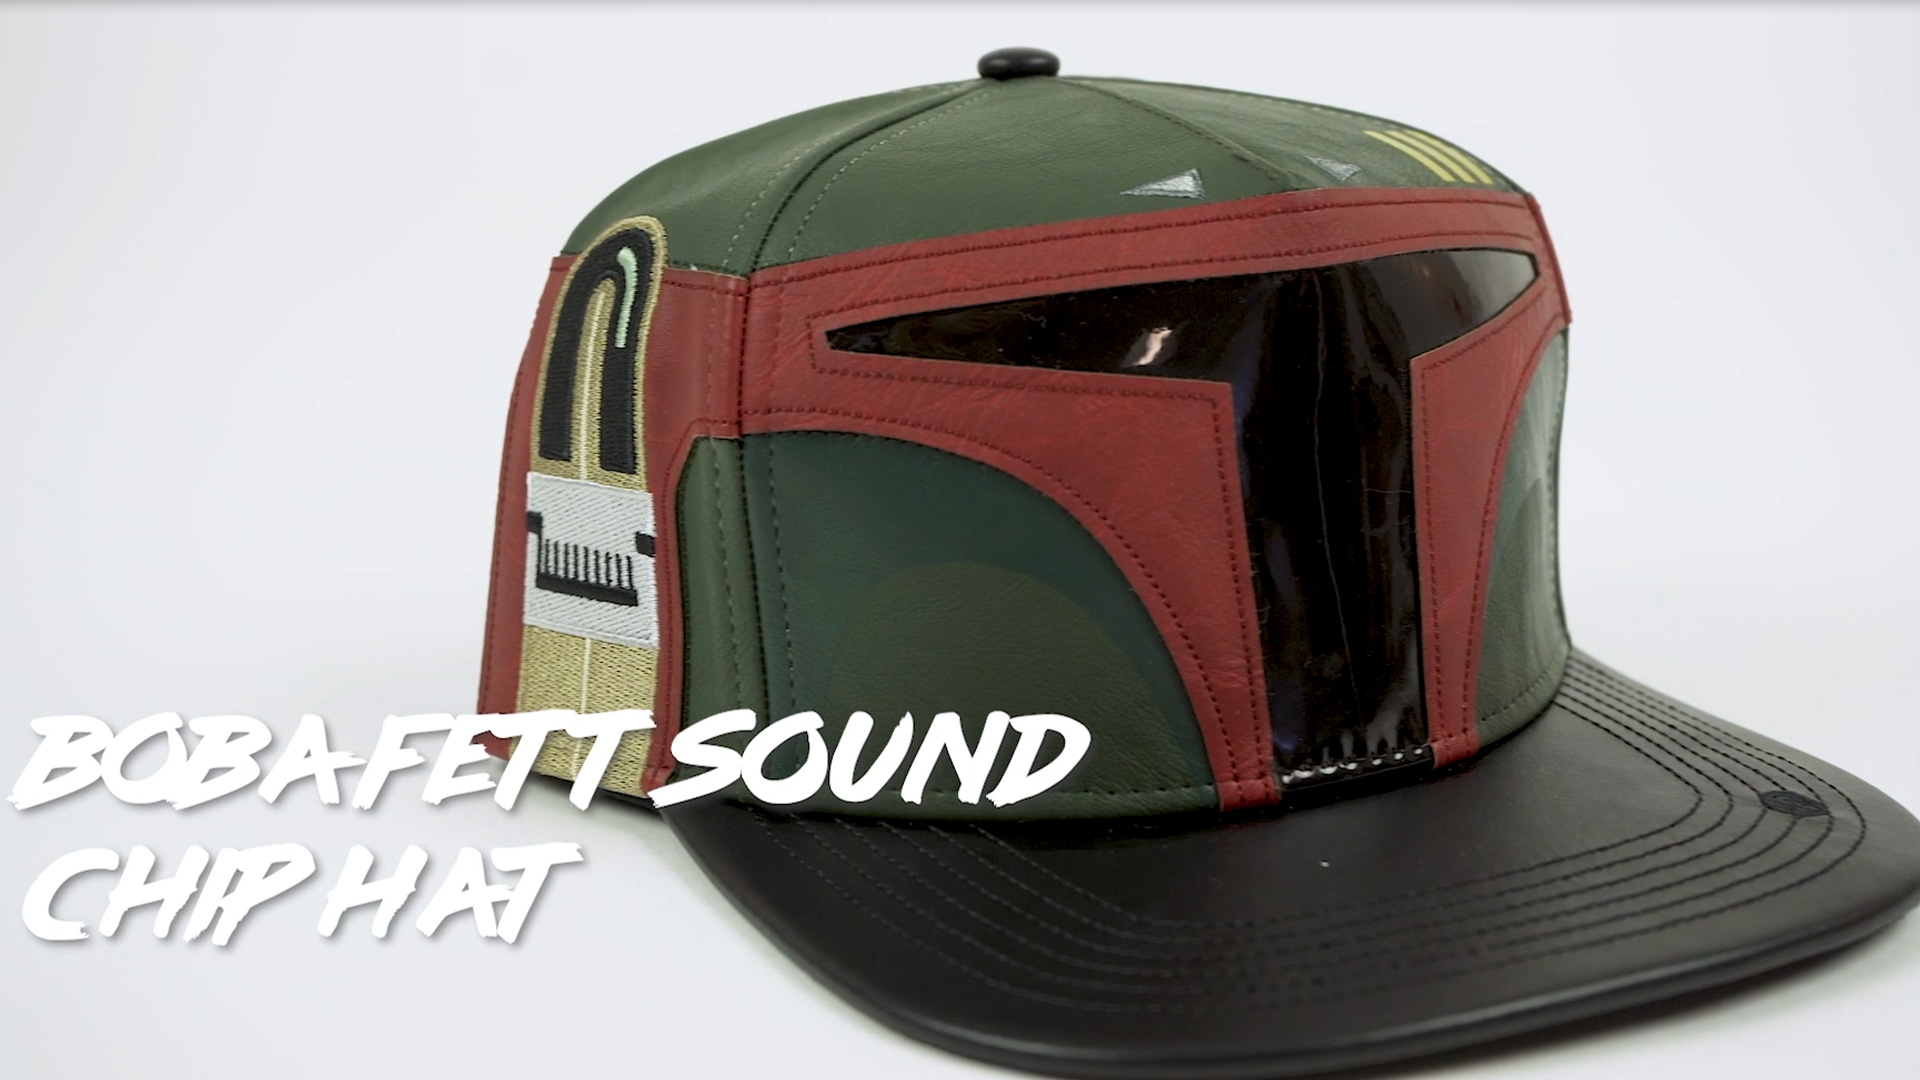 Star Wars Boba Fett Sound Chip Snapback Hat Disney Collectible Item for sale online 